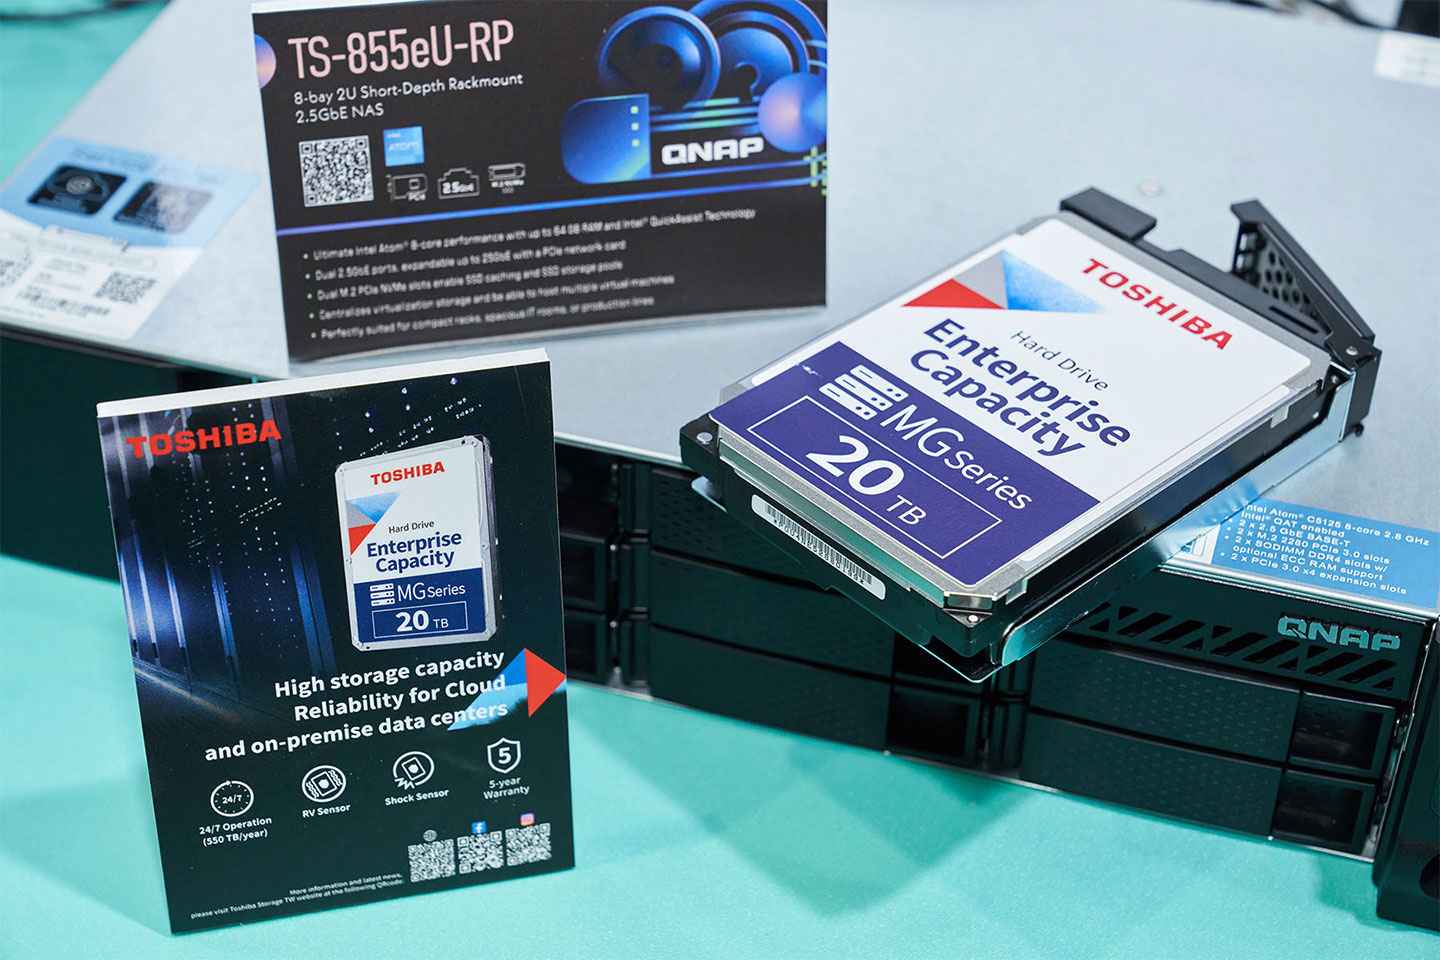 2U 機架式主機 TS-855eU-RP 可配 MG10 系列單碟最高 20TB 的大容量，打造超過 150GB 大容量的儲環境，滿足企備份或虛擬應用需求。